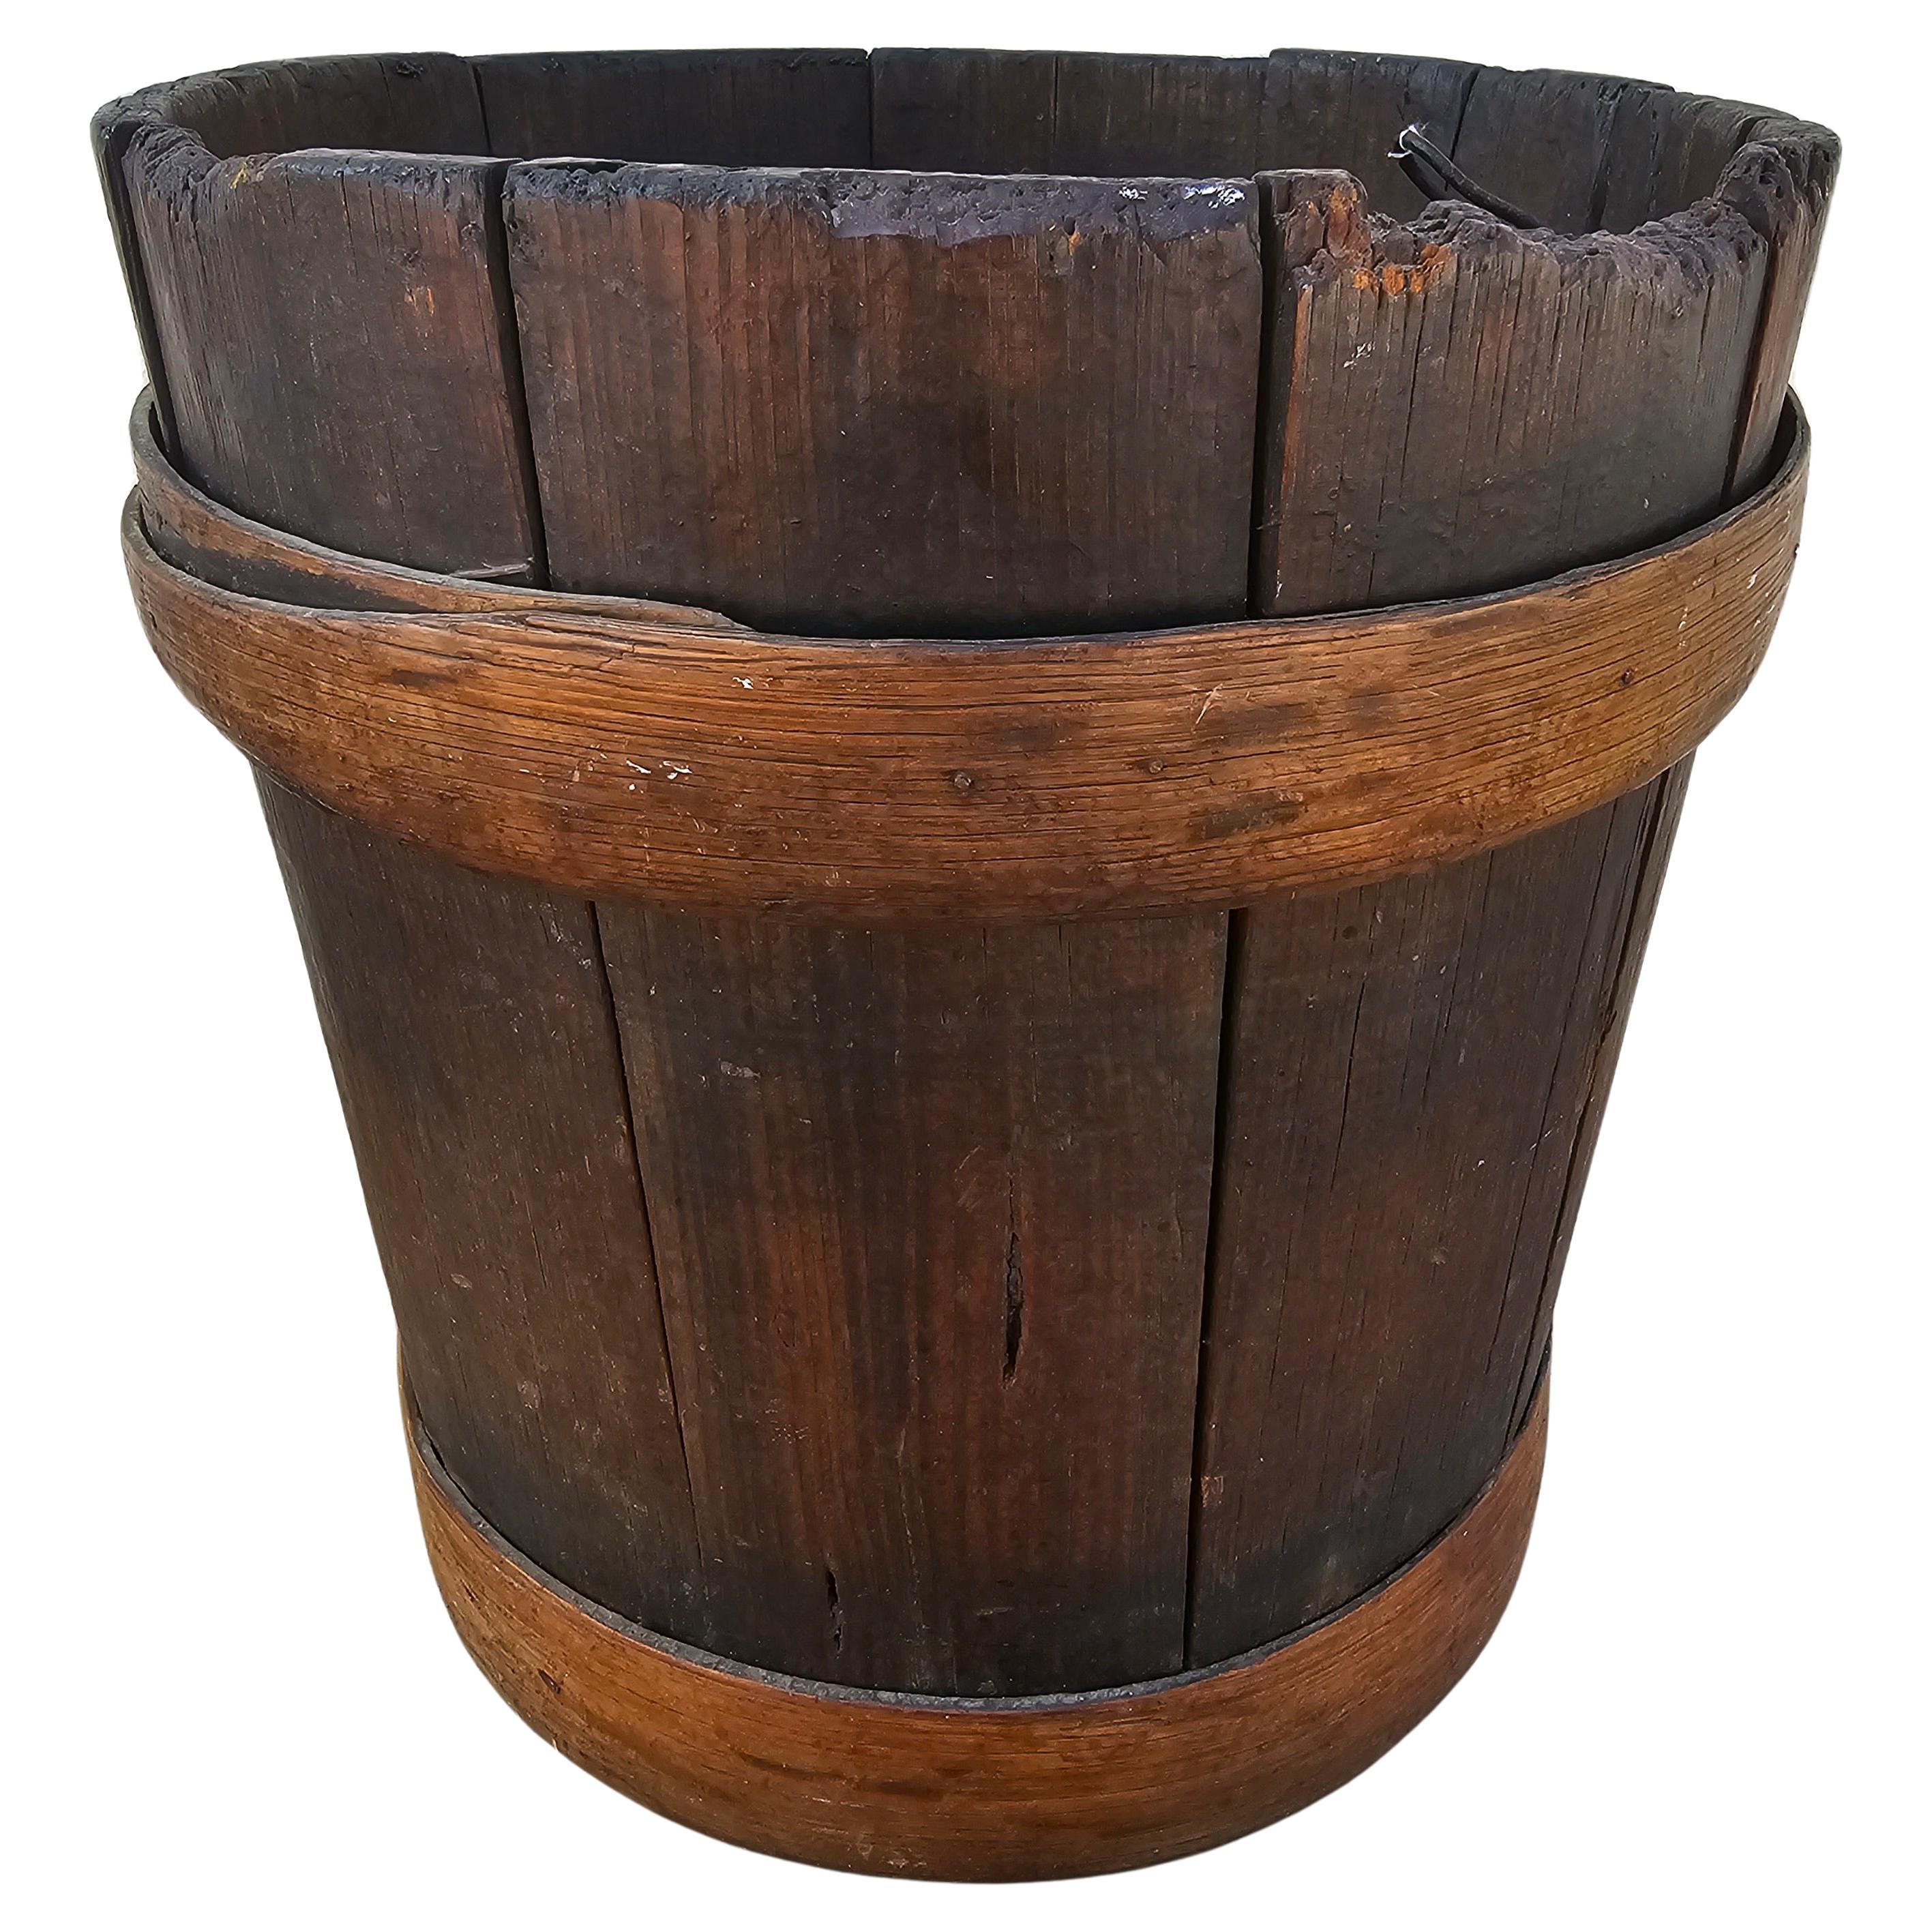 A charming 18th Century Elm Primitivist Kindling or Fire Bucket measuring 12